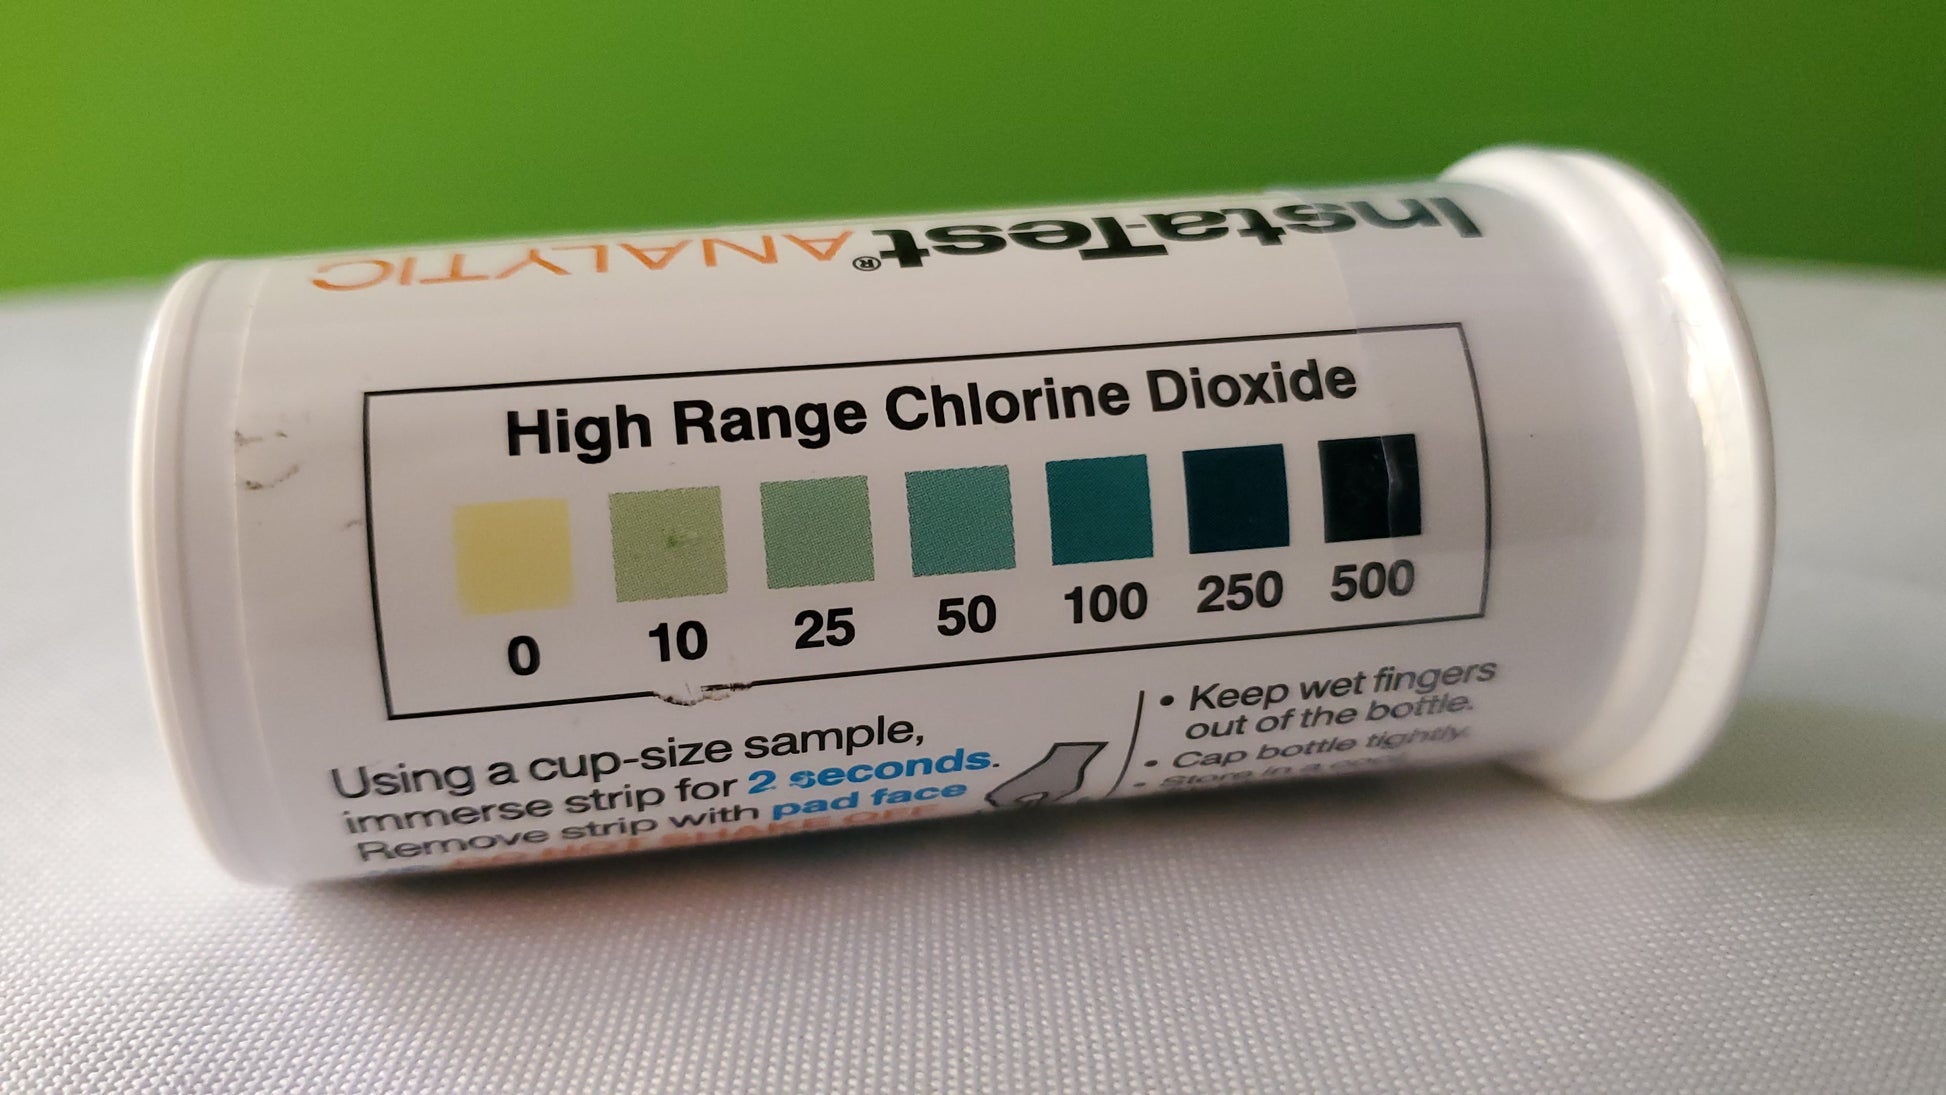 high range chlorine dioxide test strips